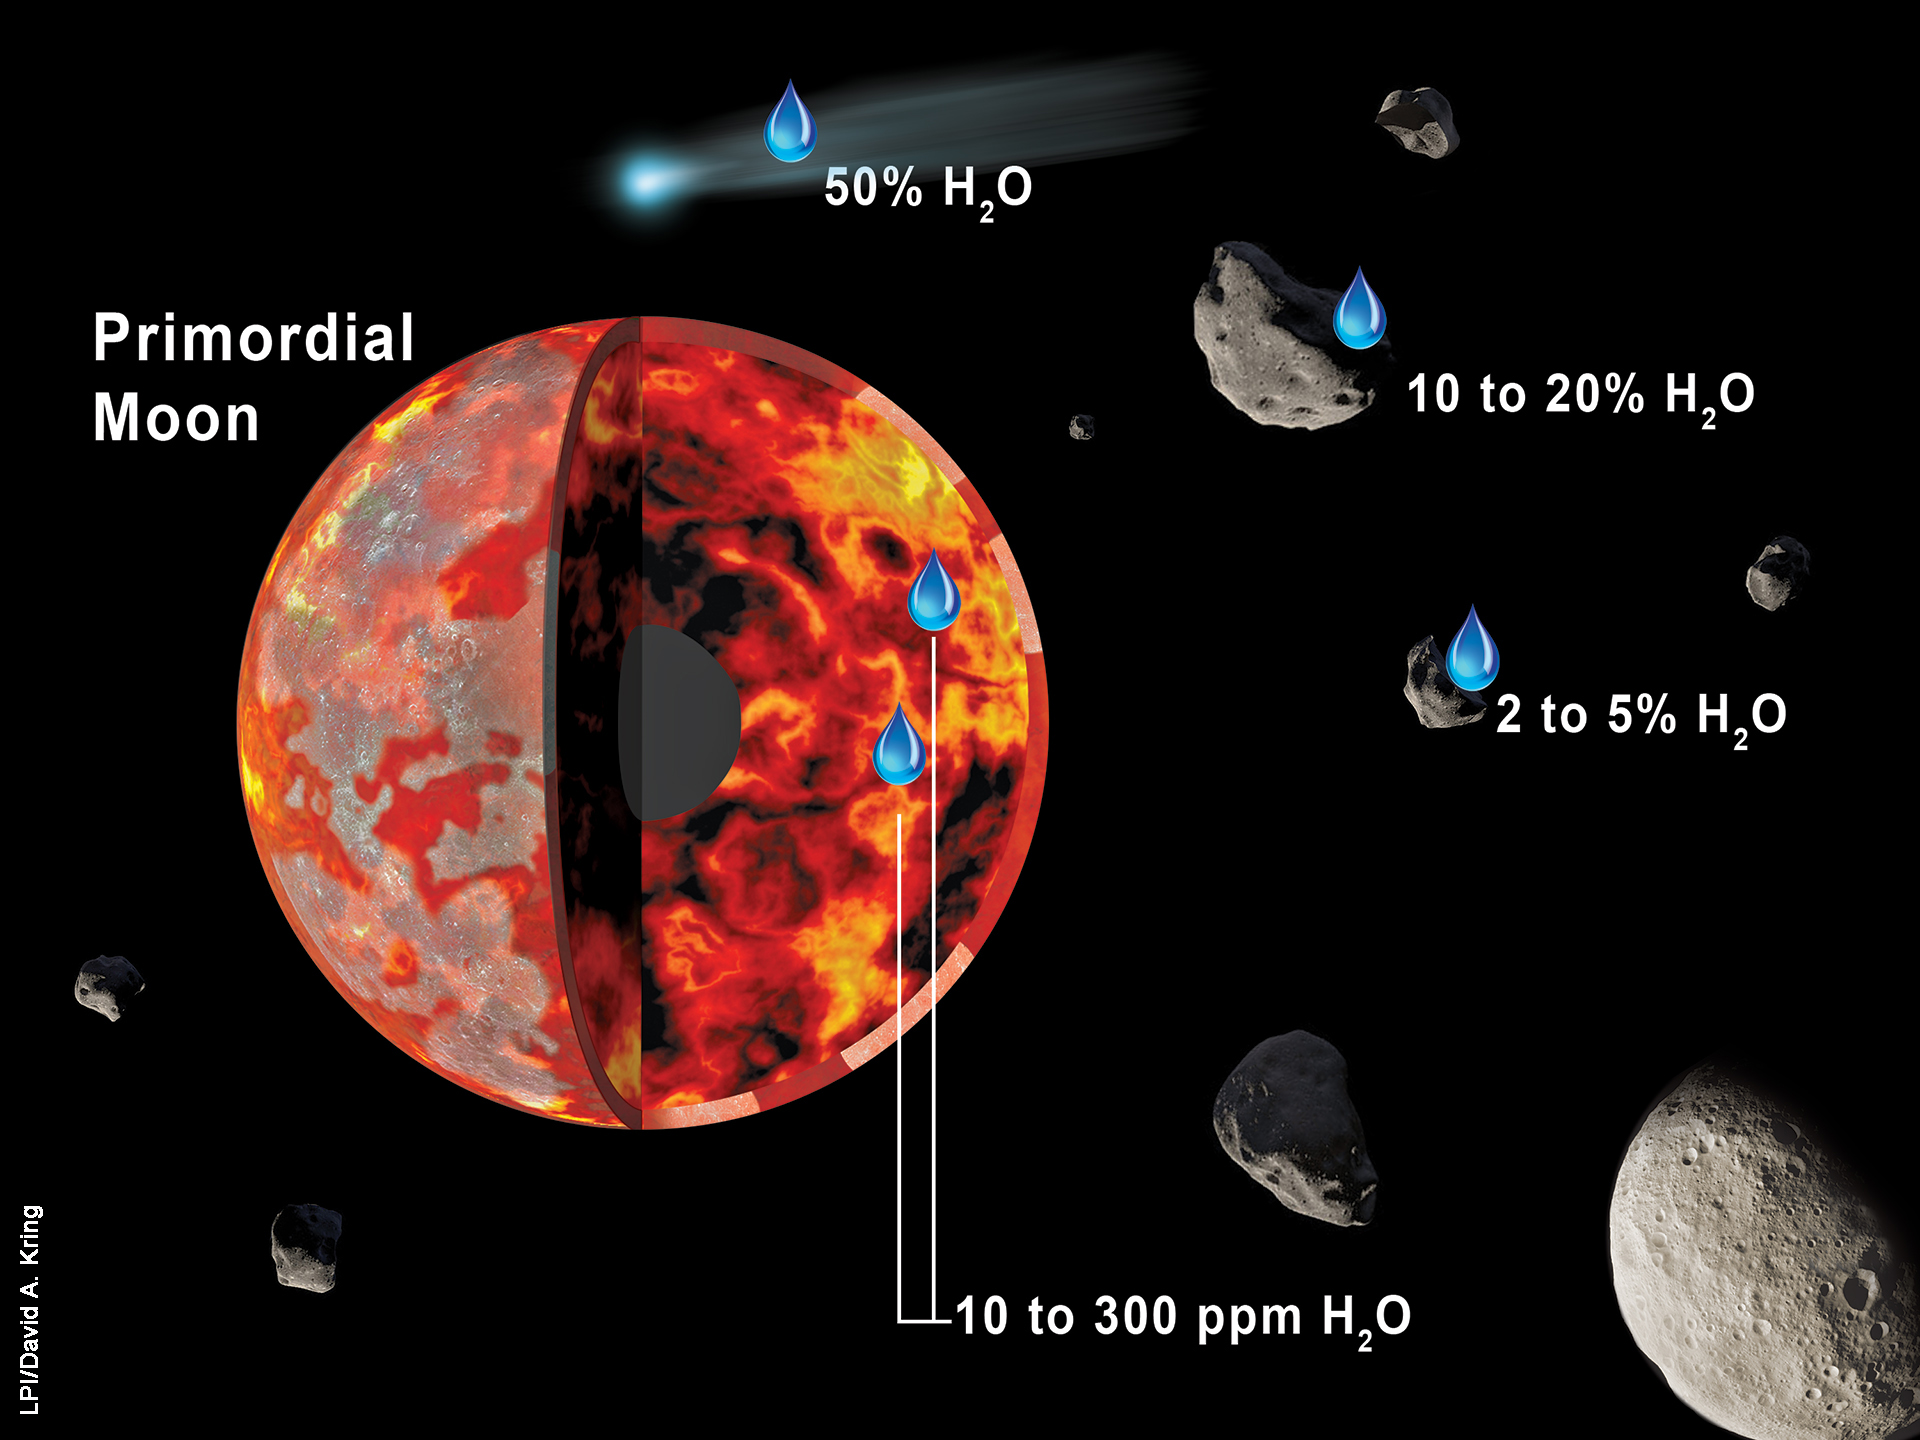 Source of Lunar Water 2 (LPI, David A. Kring)